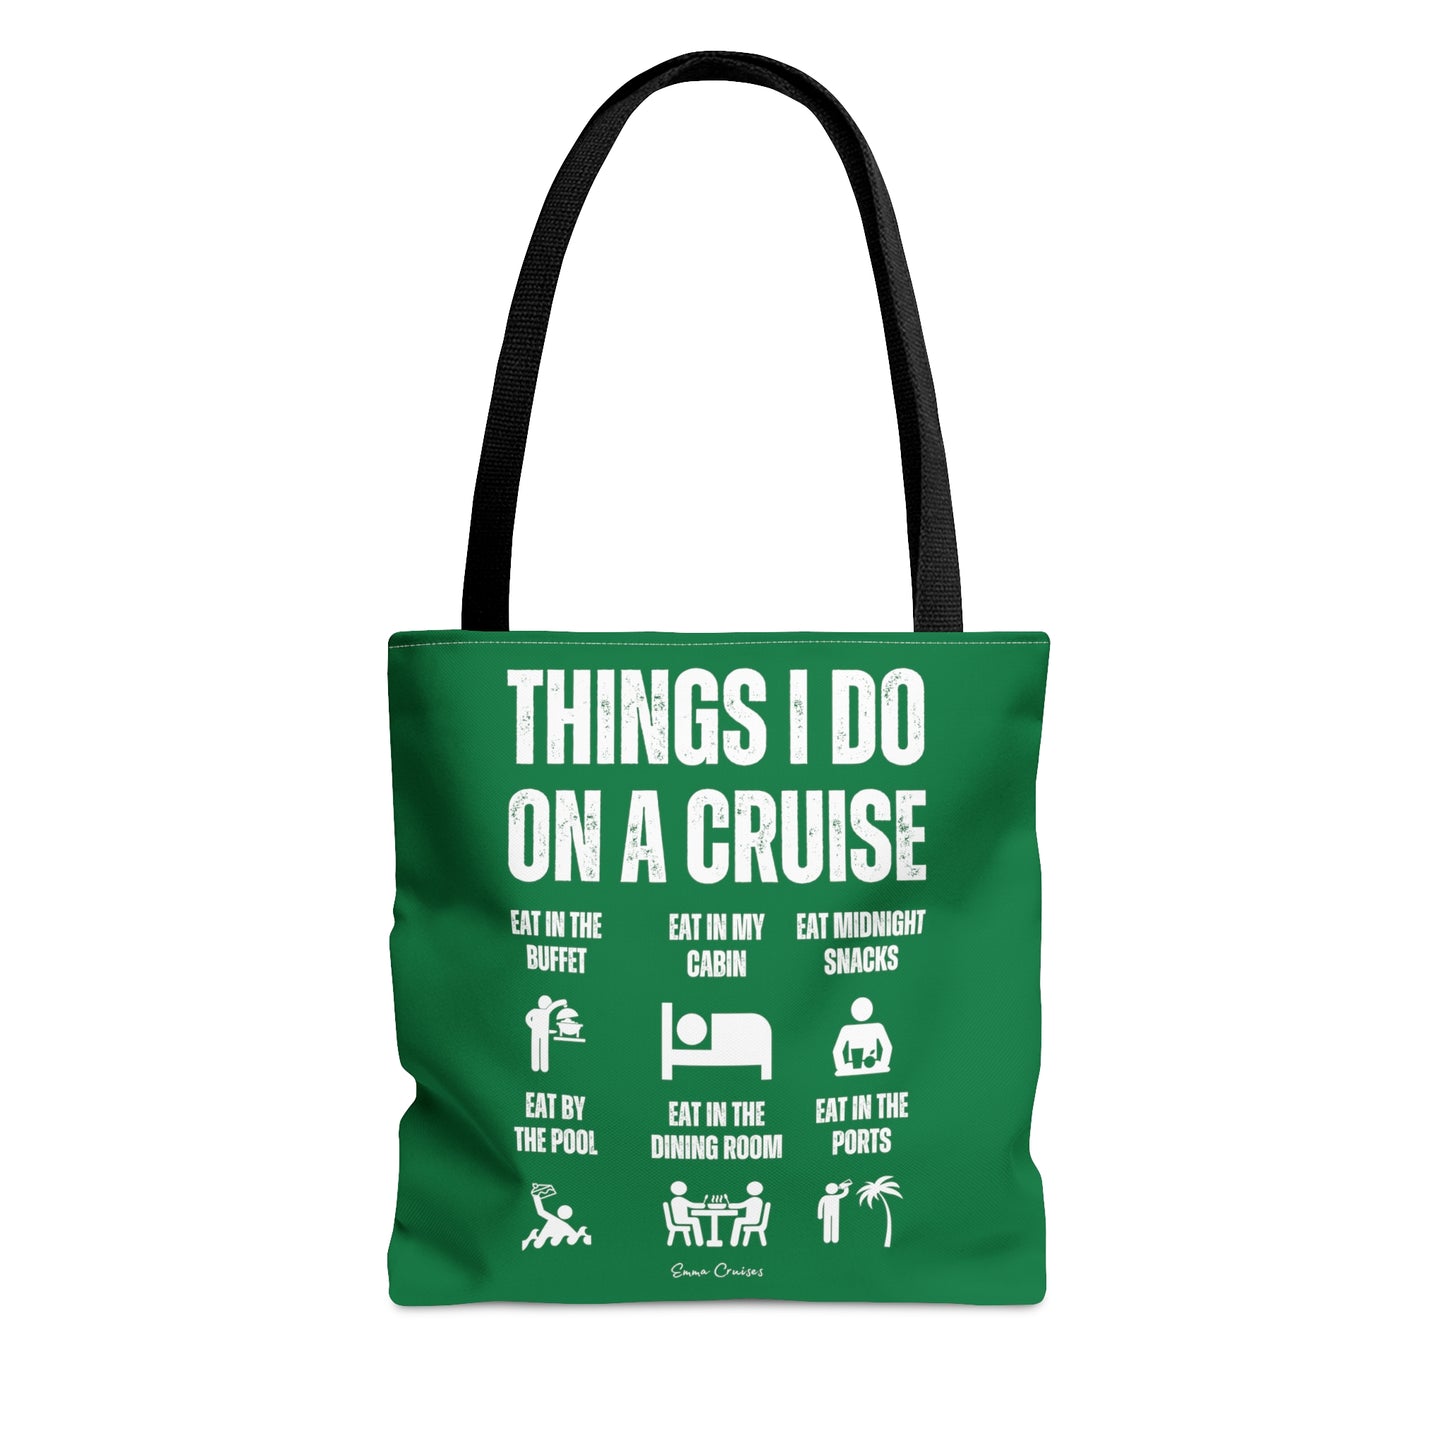 Things I Do on a Cruise - Bag